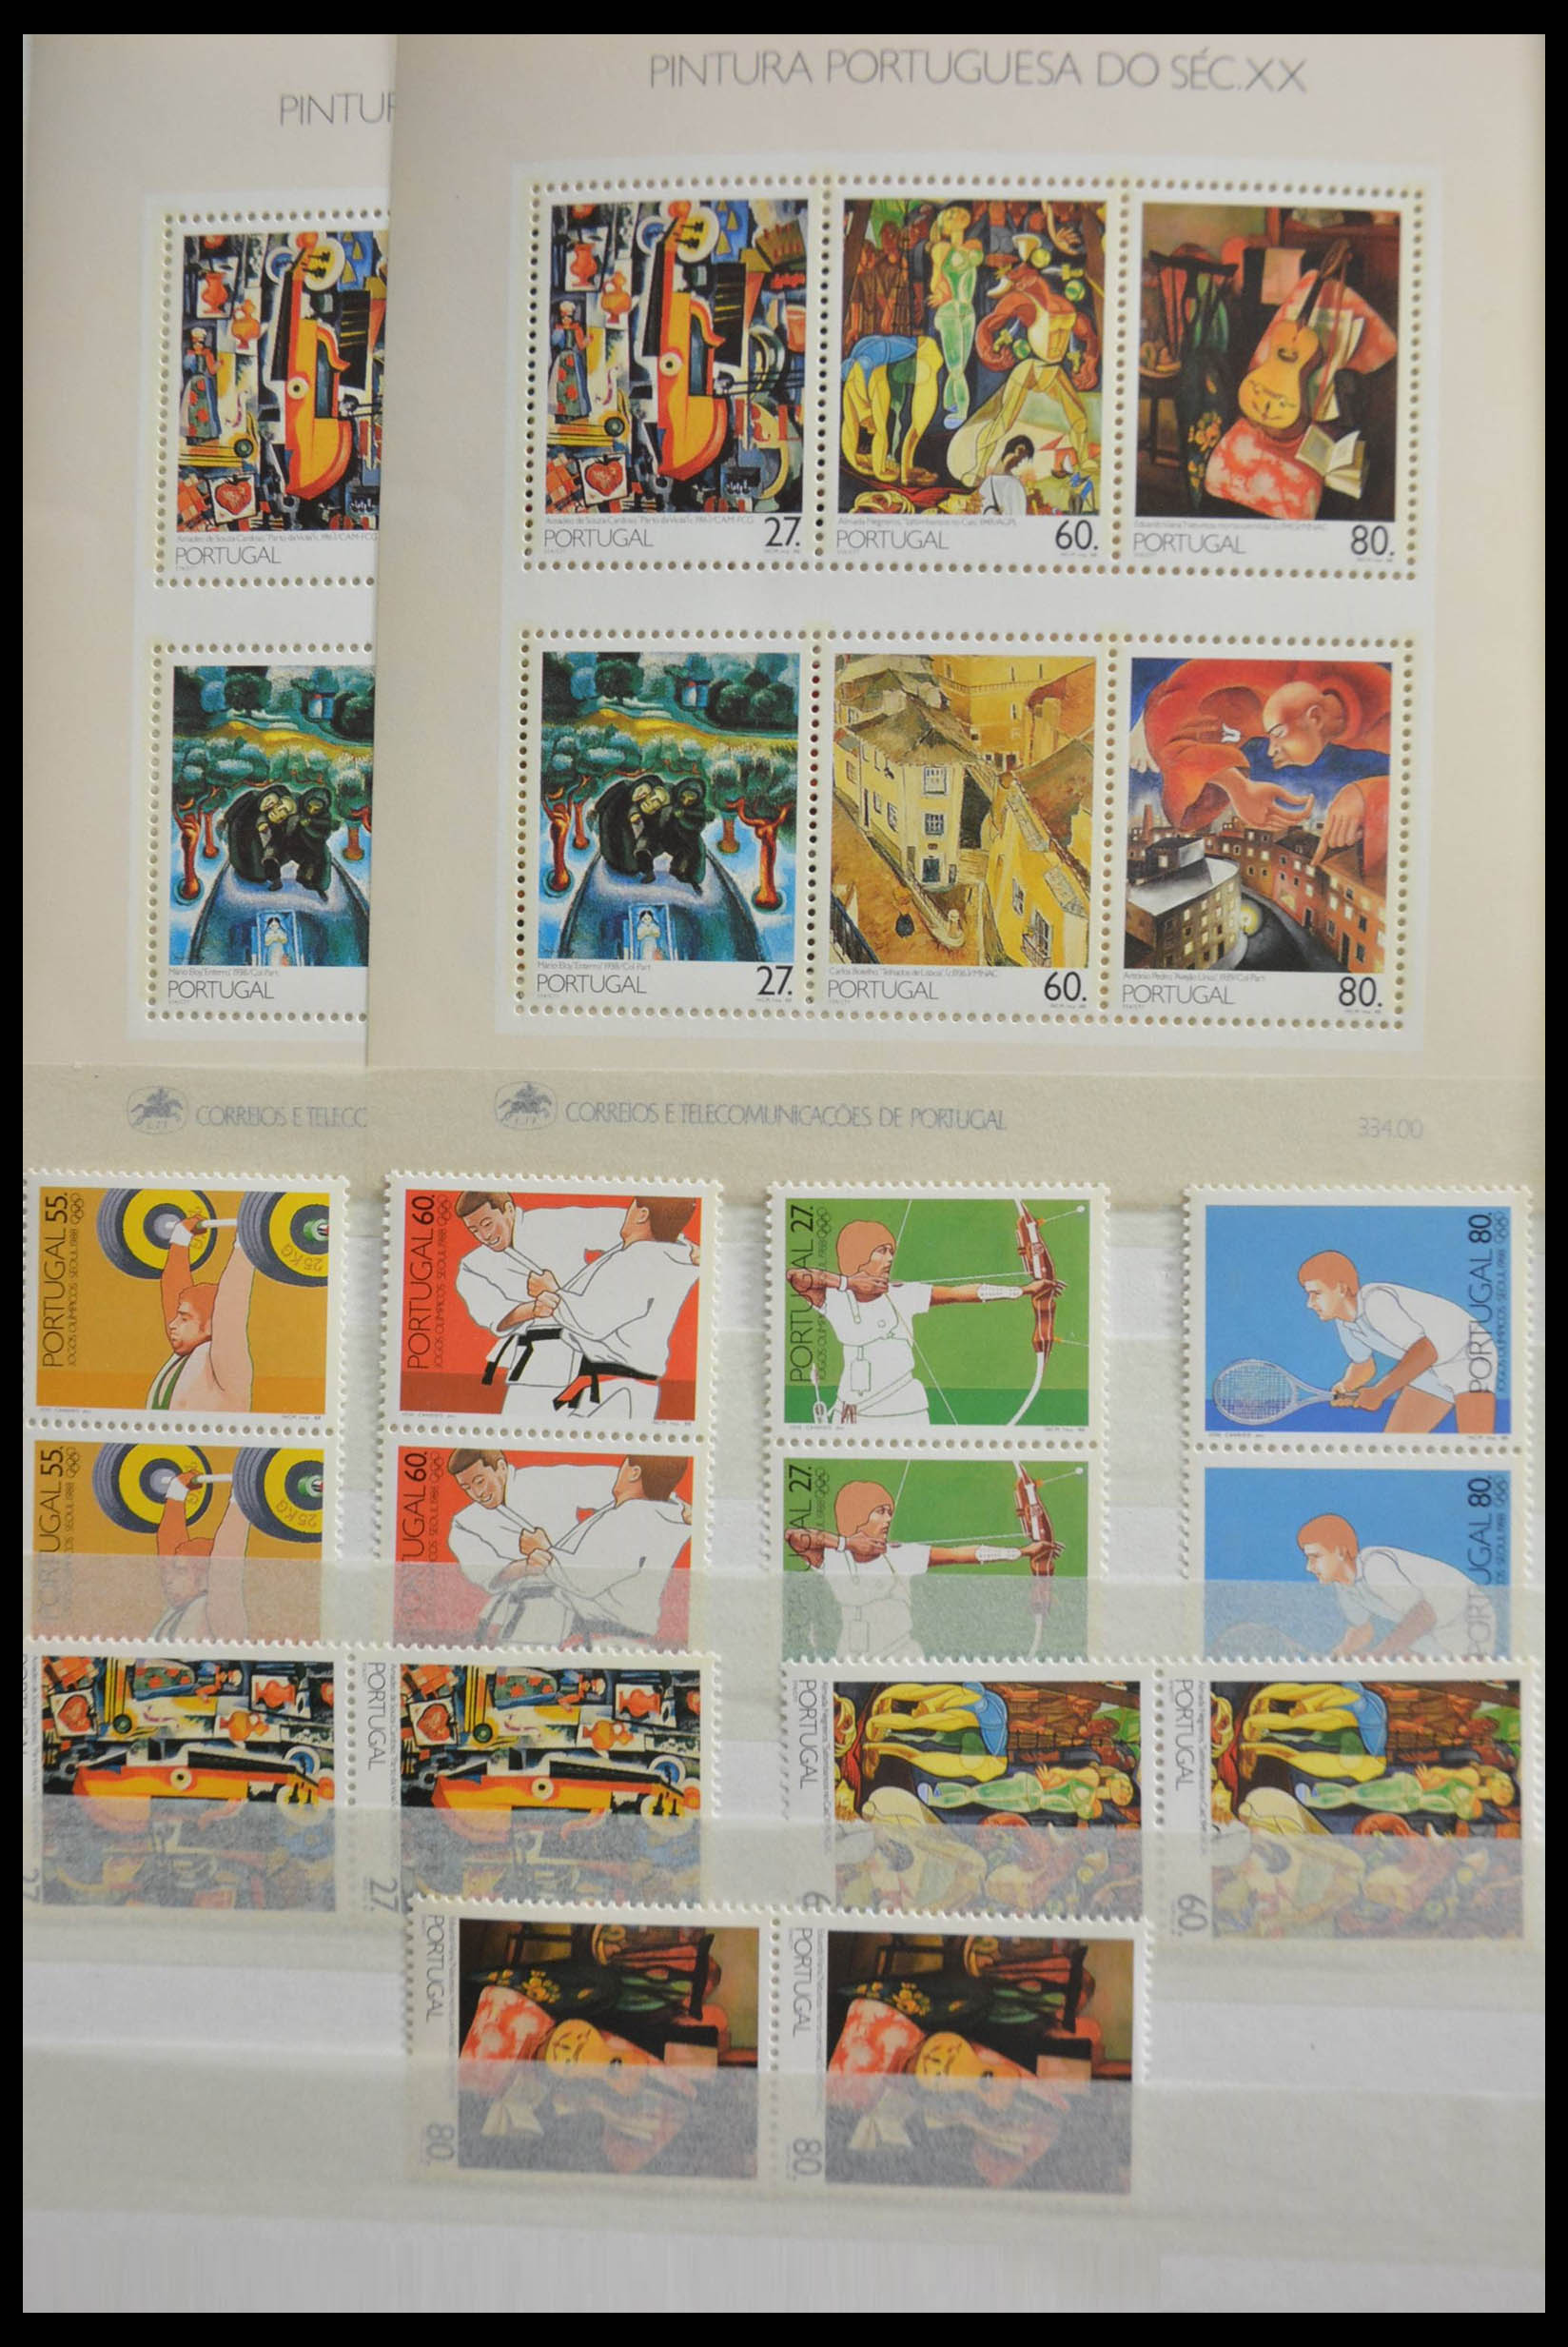 28540 054 - 28540 Portugal souvenir sheets.